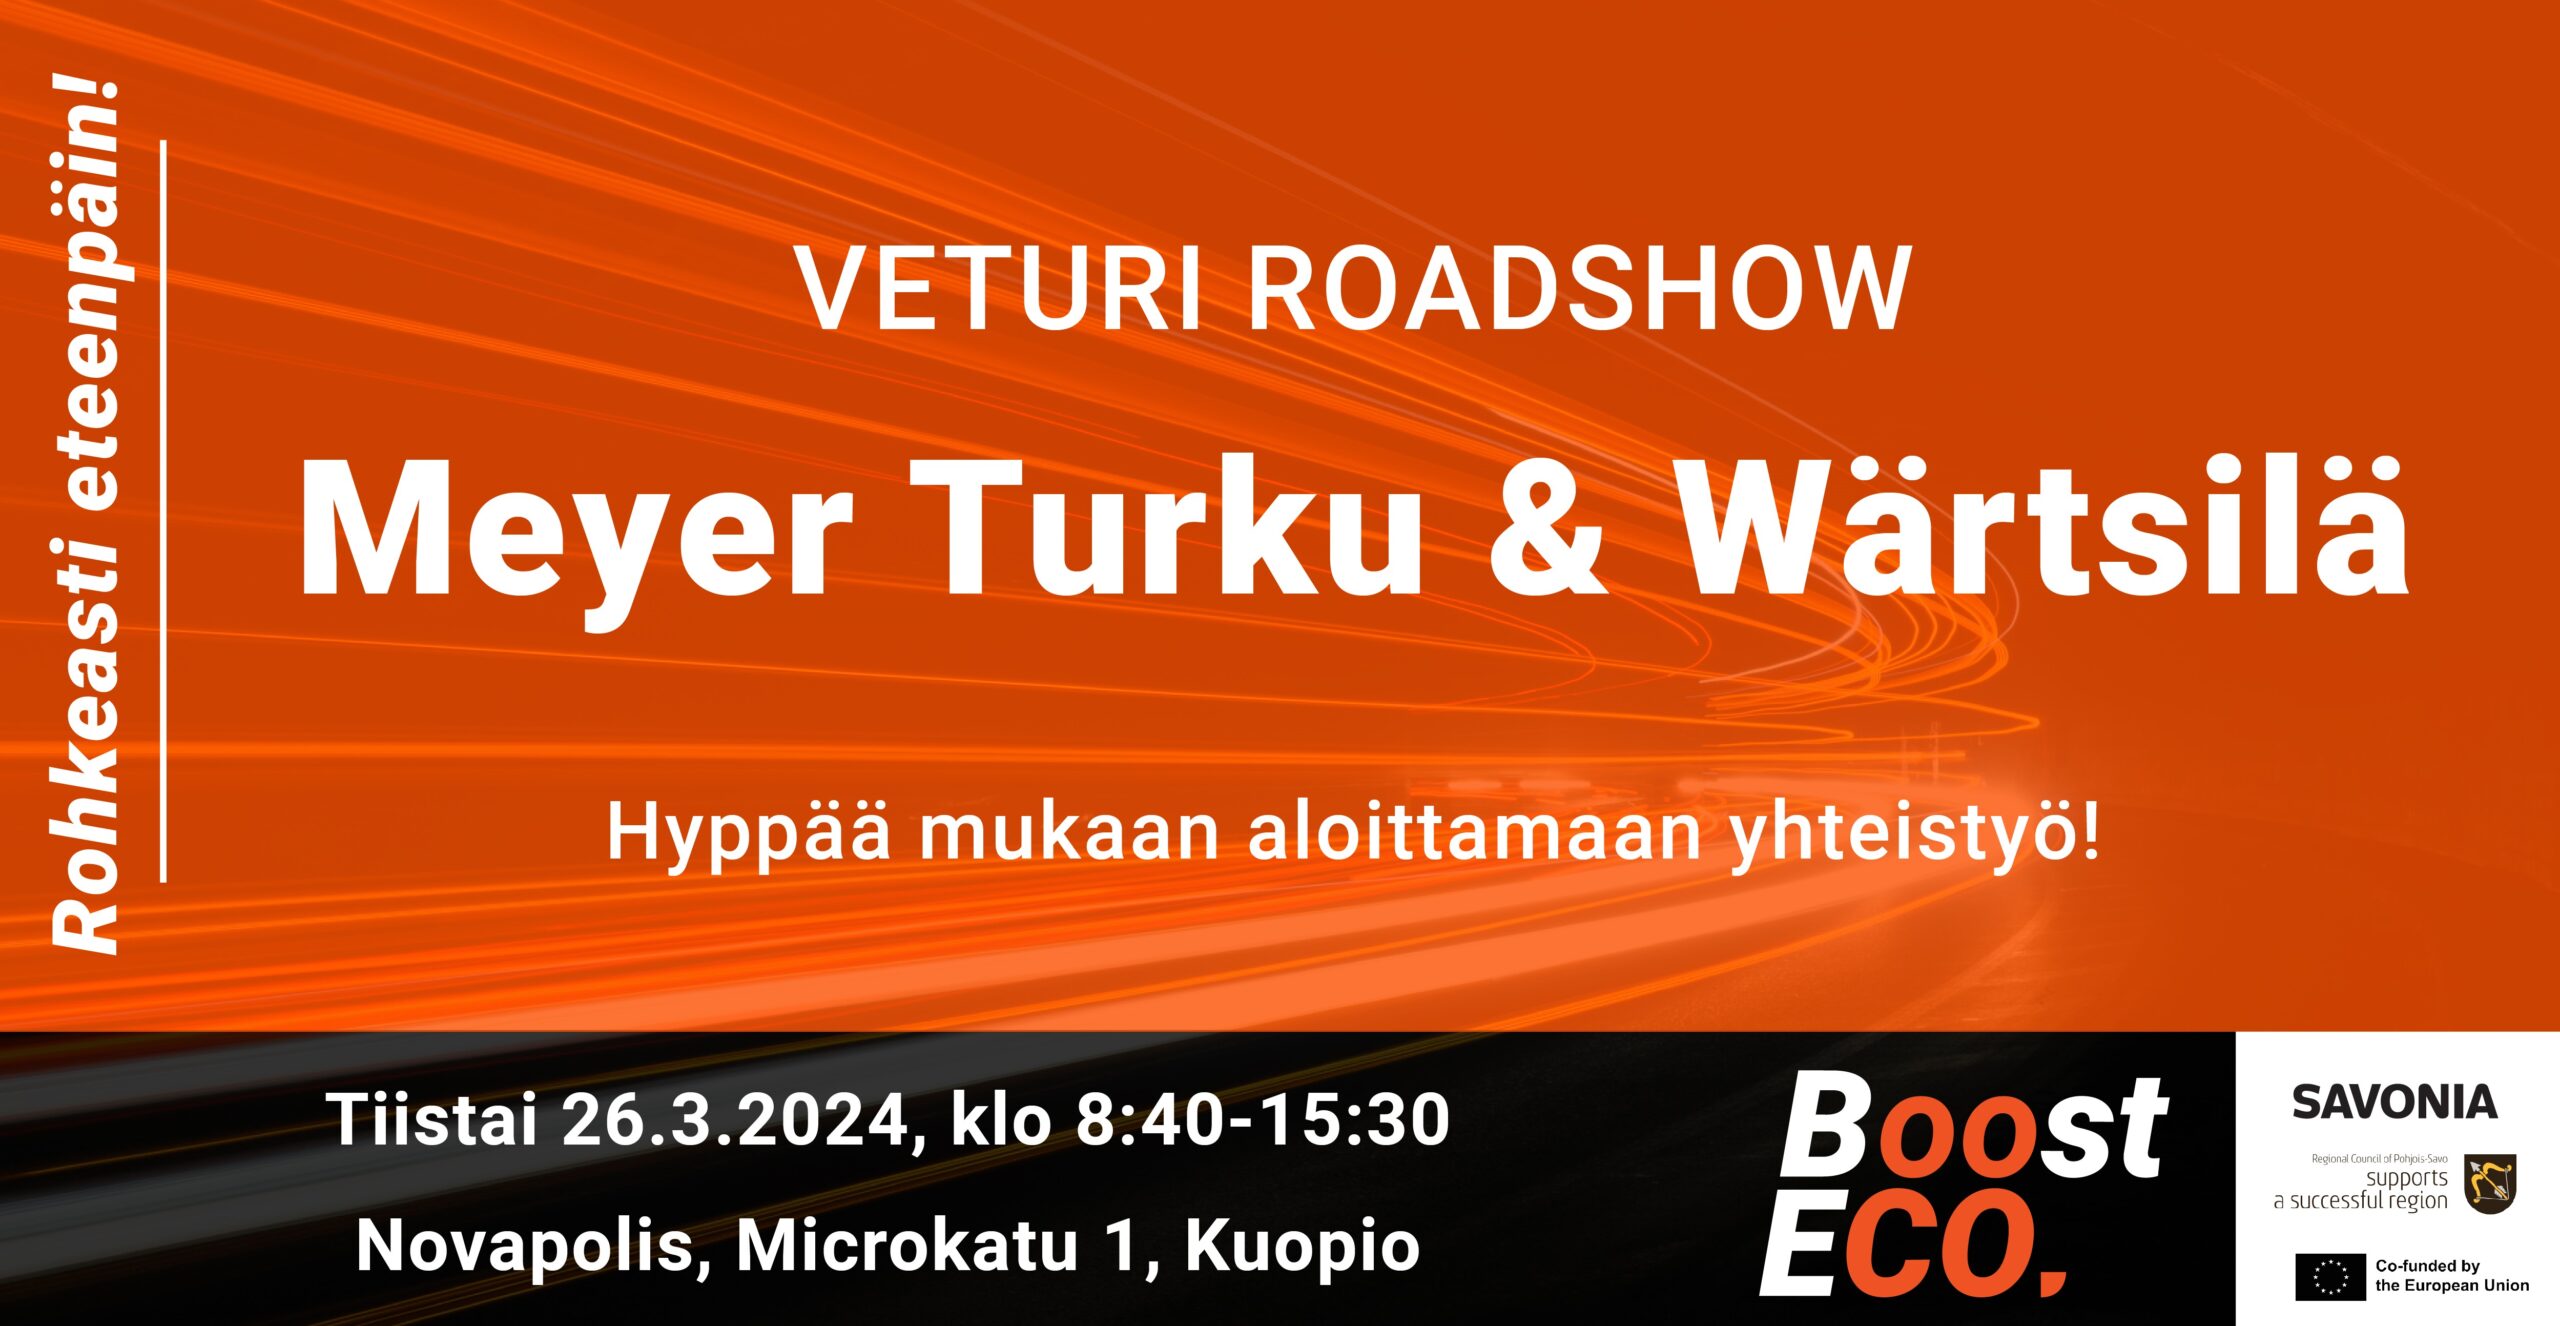 Veturi-Roadshow_Meyer-Turku-Wartsila_Banner_FI_20240326-2-scaled